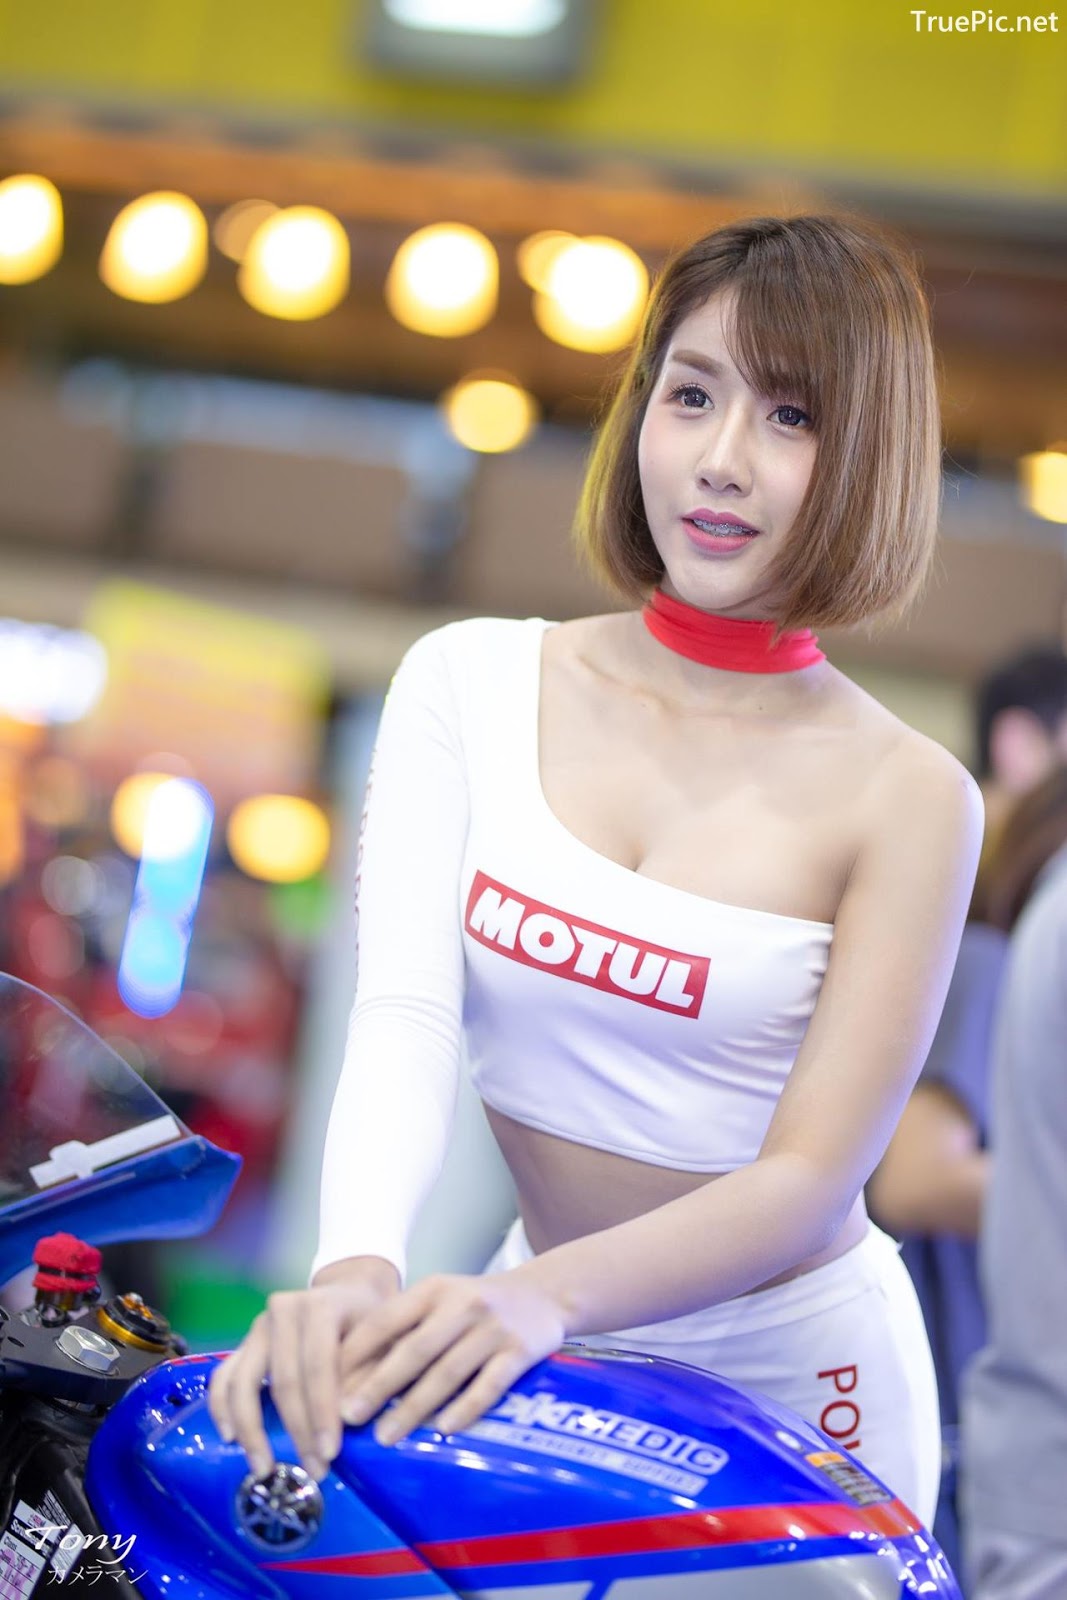 Image-Thailand-Hot-Model-Thai-Racing-Girl-At-Big-Motor-2018-TruePic.net- Picture-27